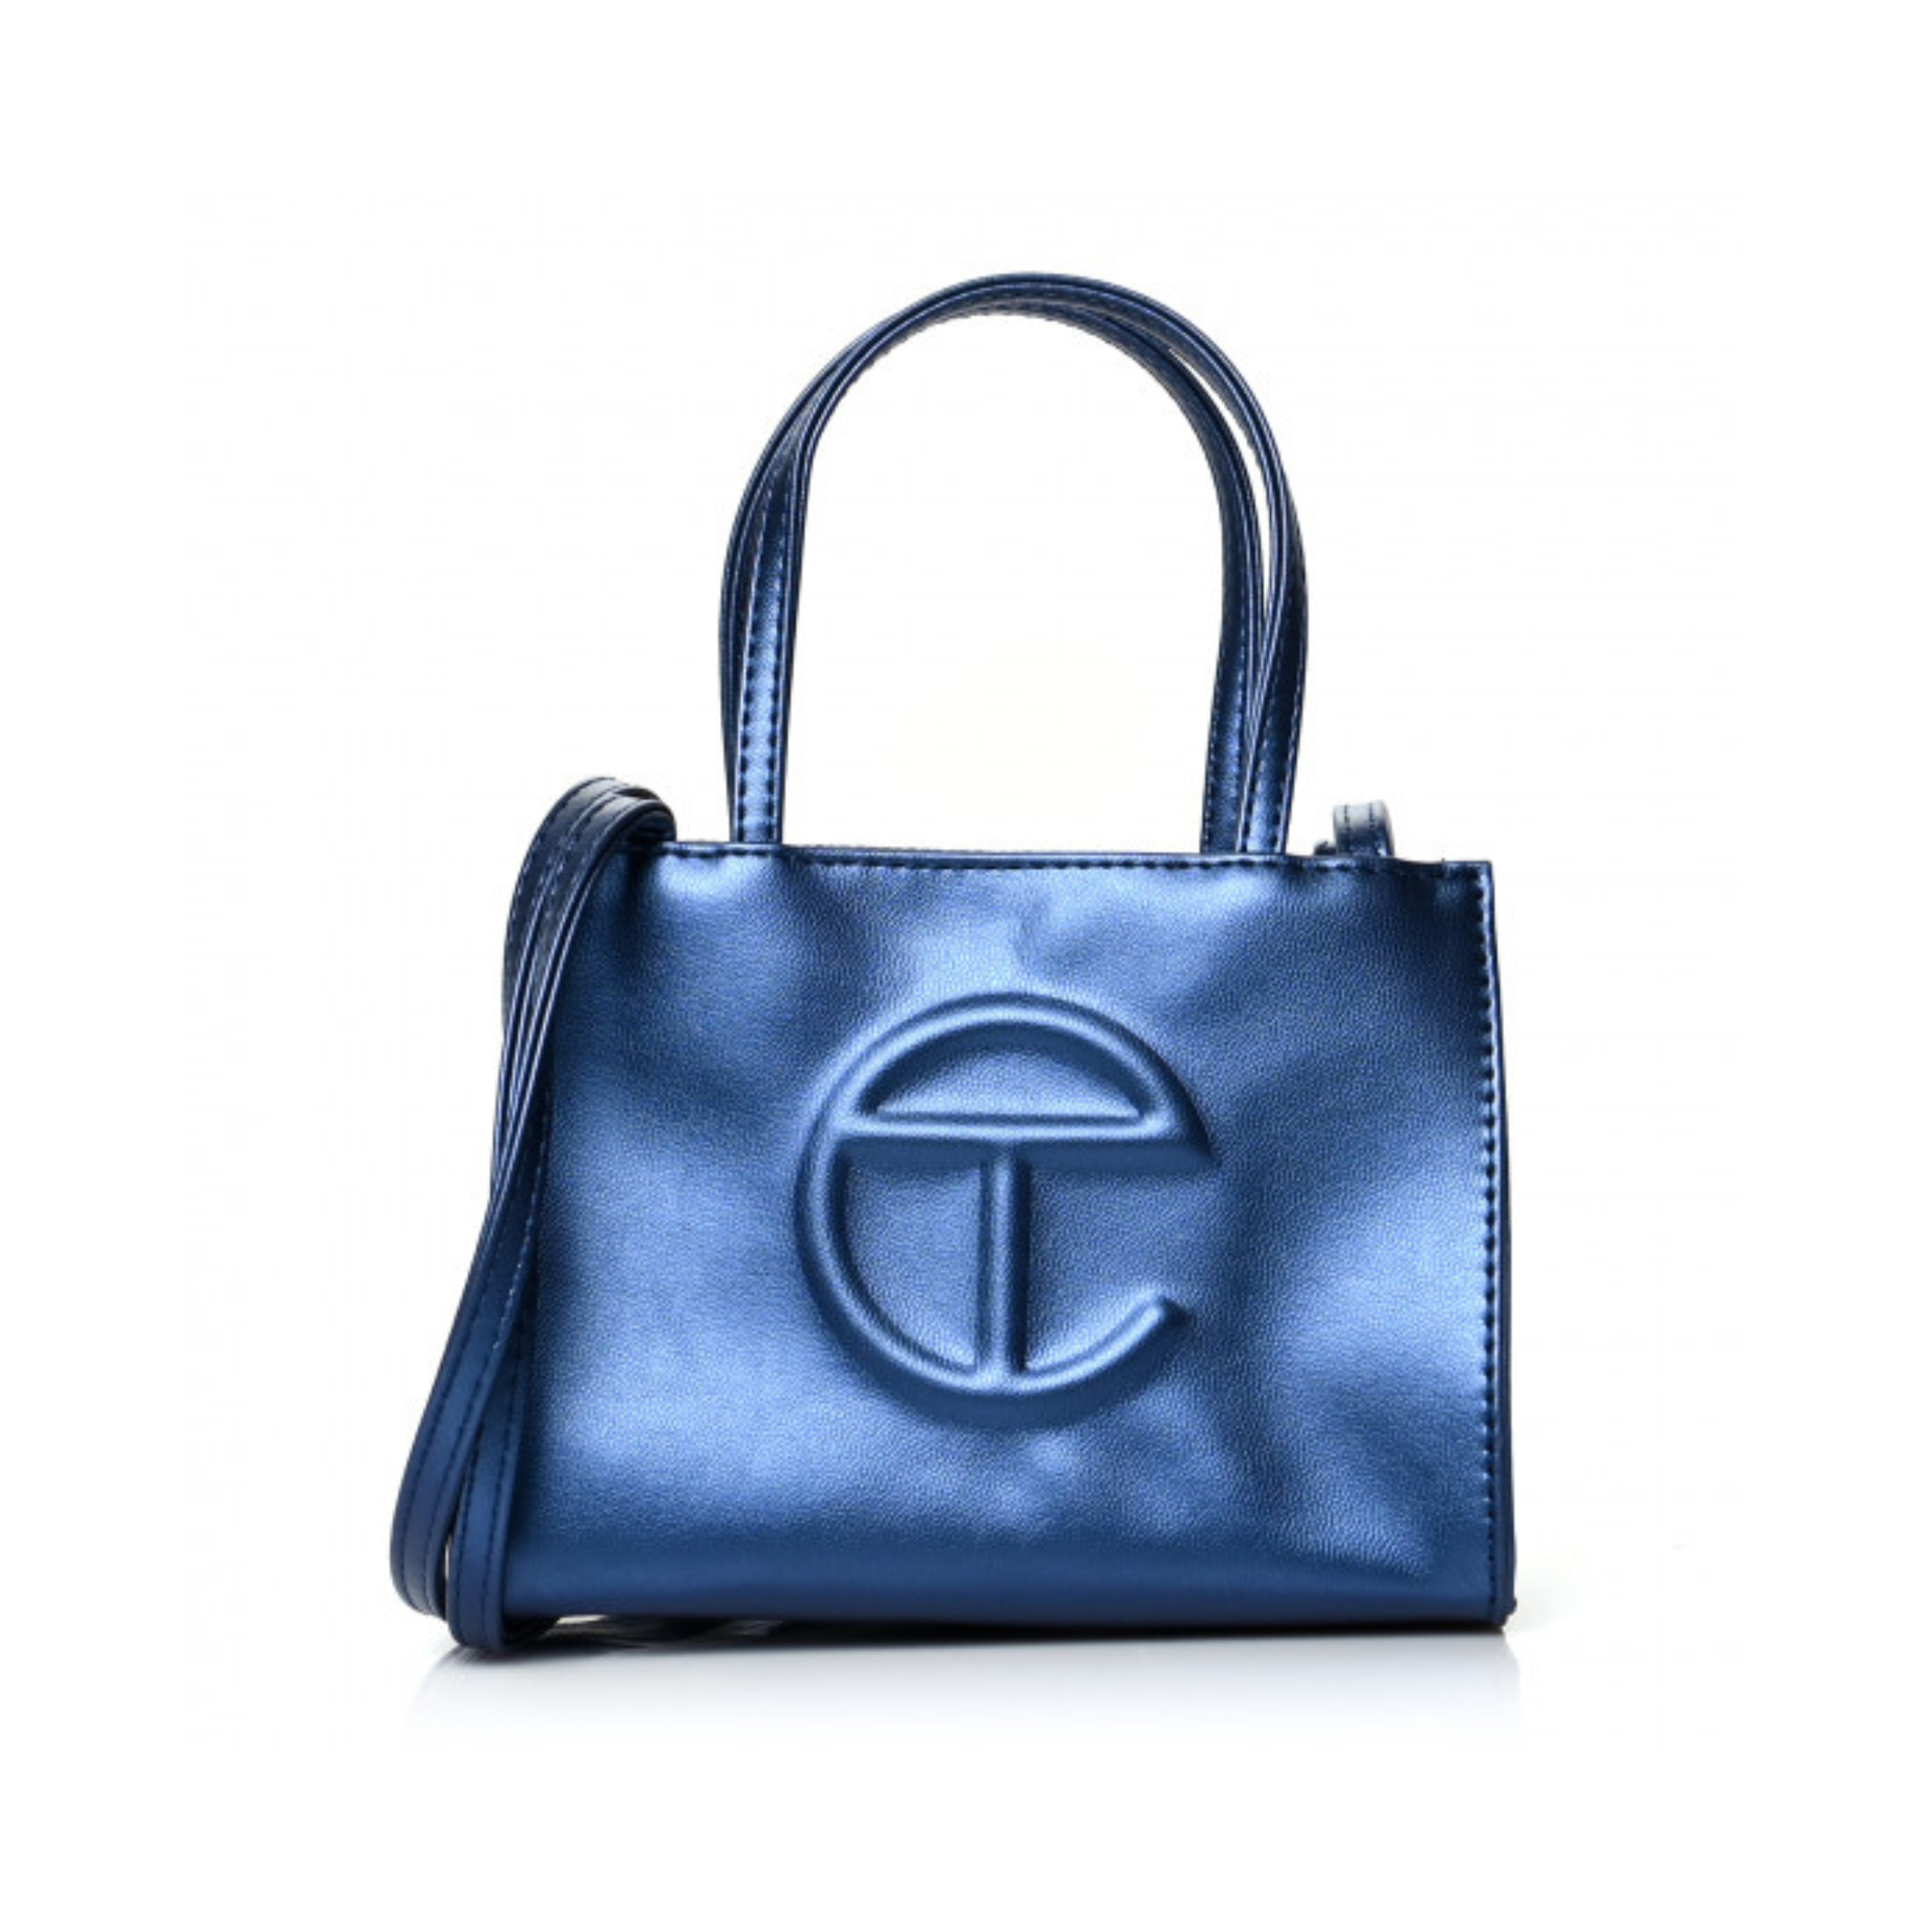 15 Top Luxury Handbag Brands to Invest In - Paisley & Sparrow